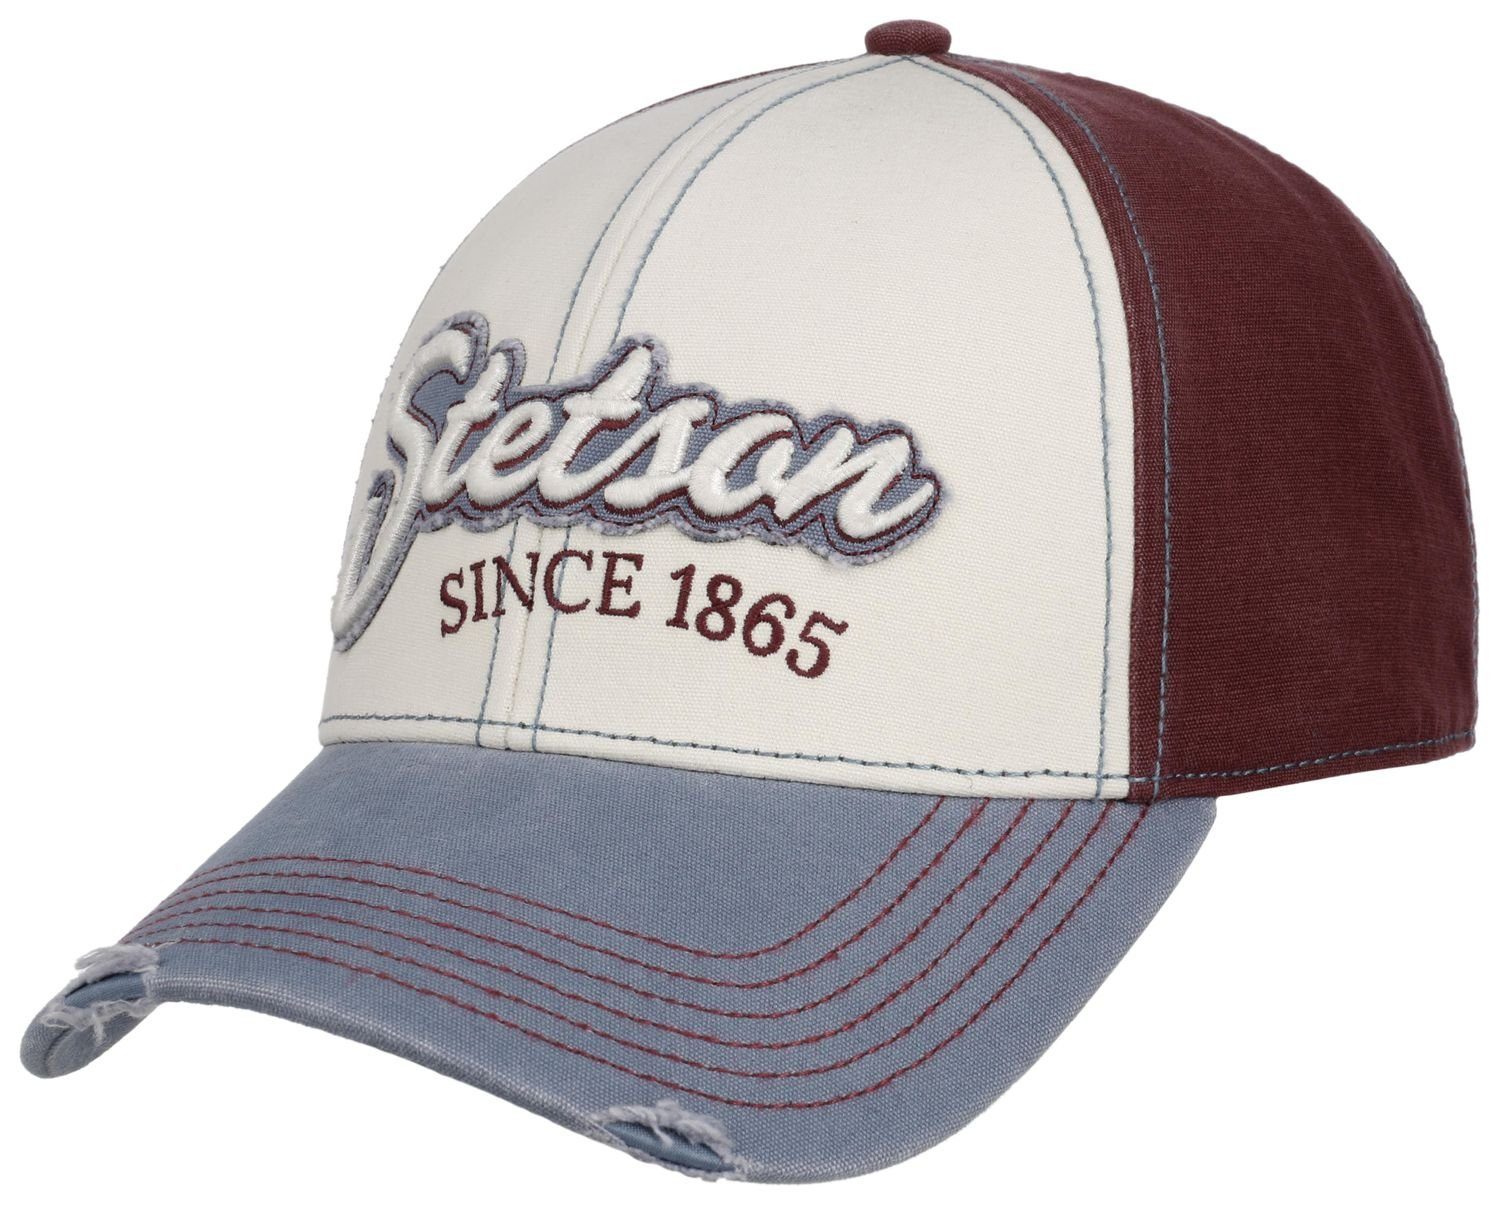 Stetson Baseball Cap Baseball Cap Vintage Distressed